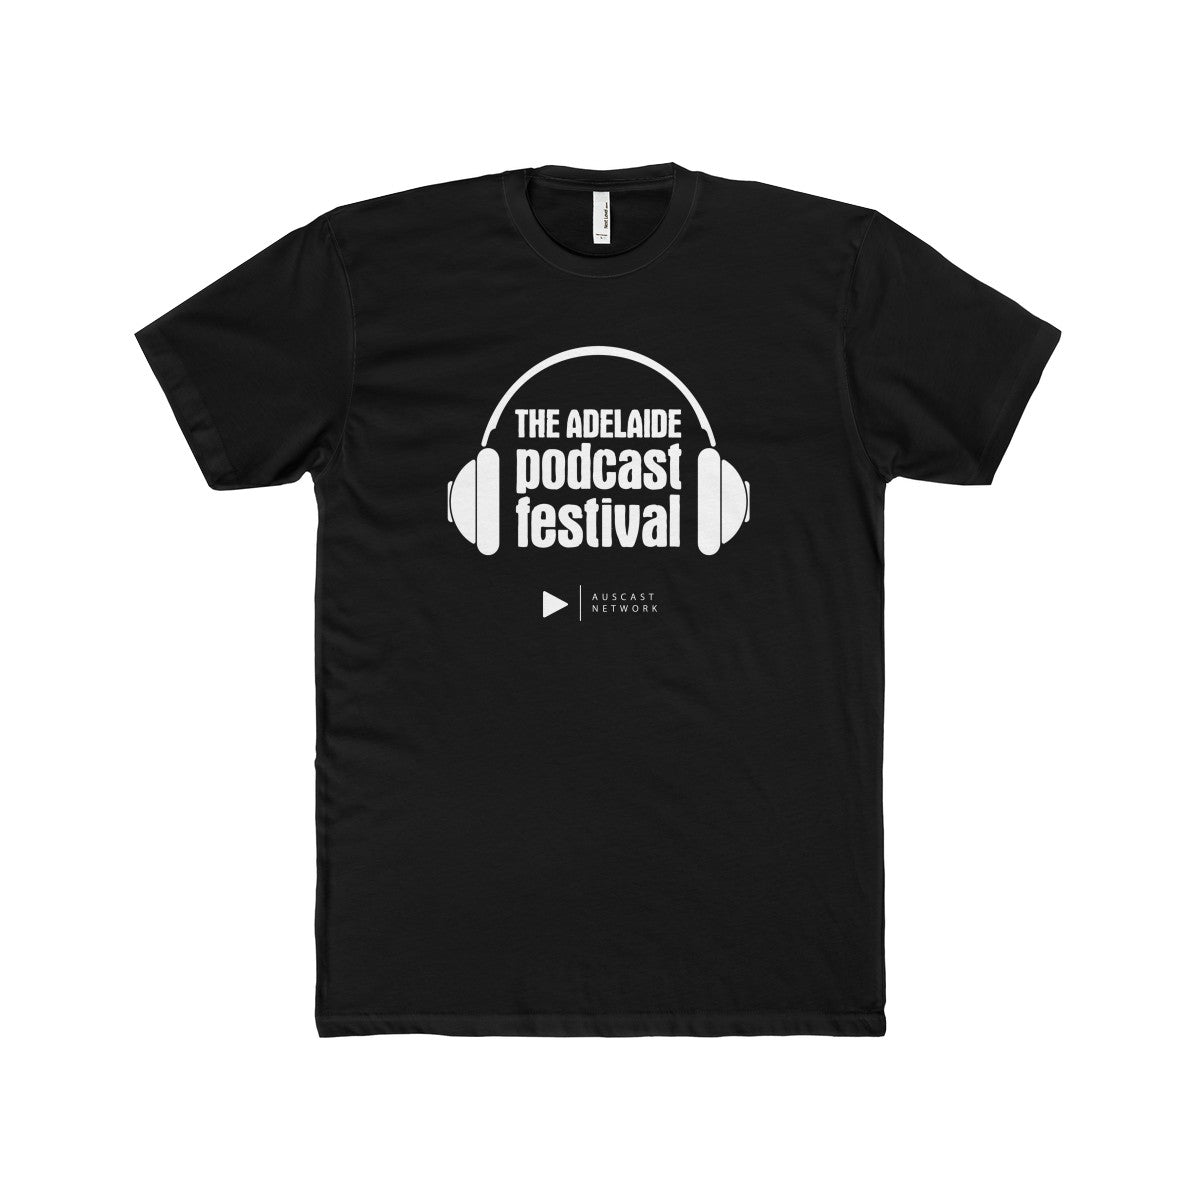 Adelaide Podcast Festival Men's Cotton Crew Tee